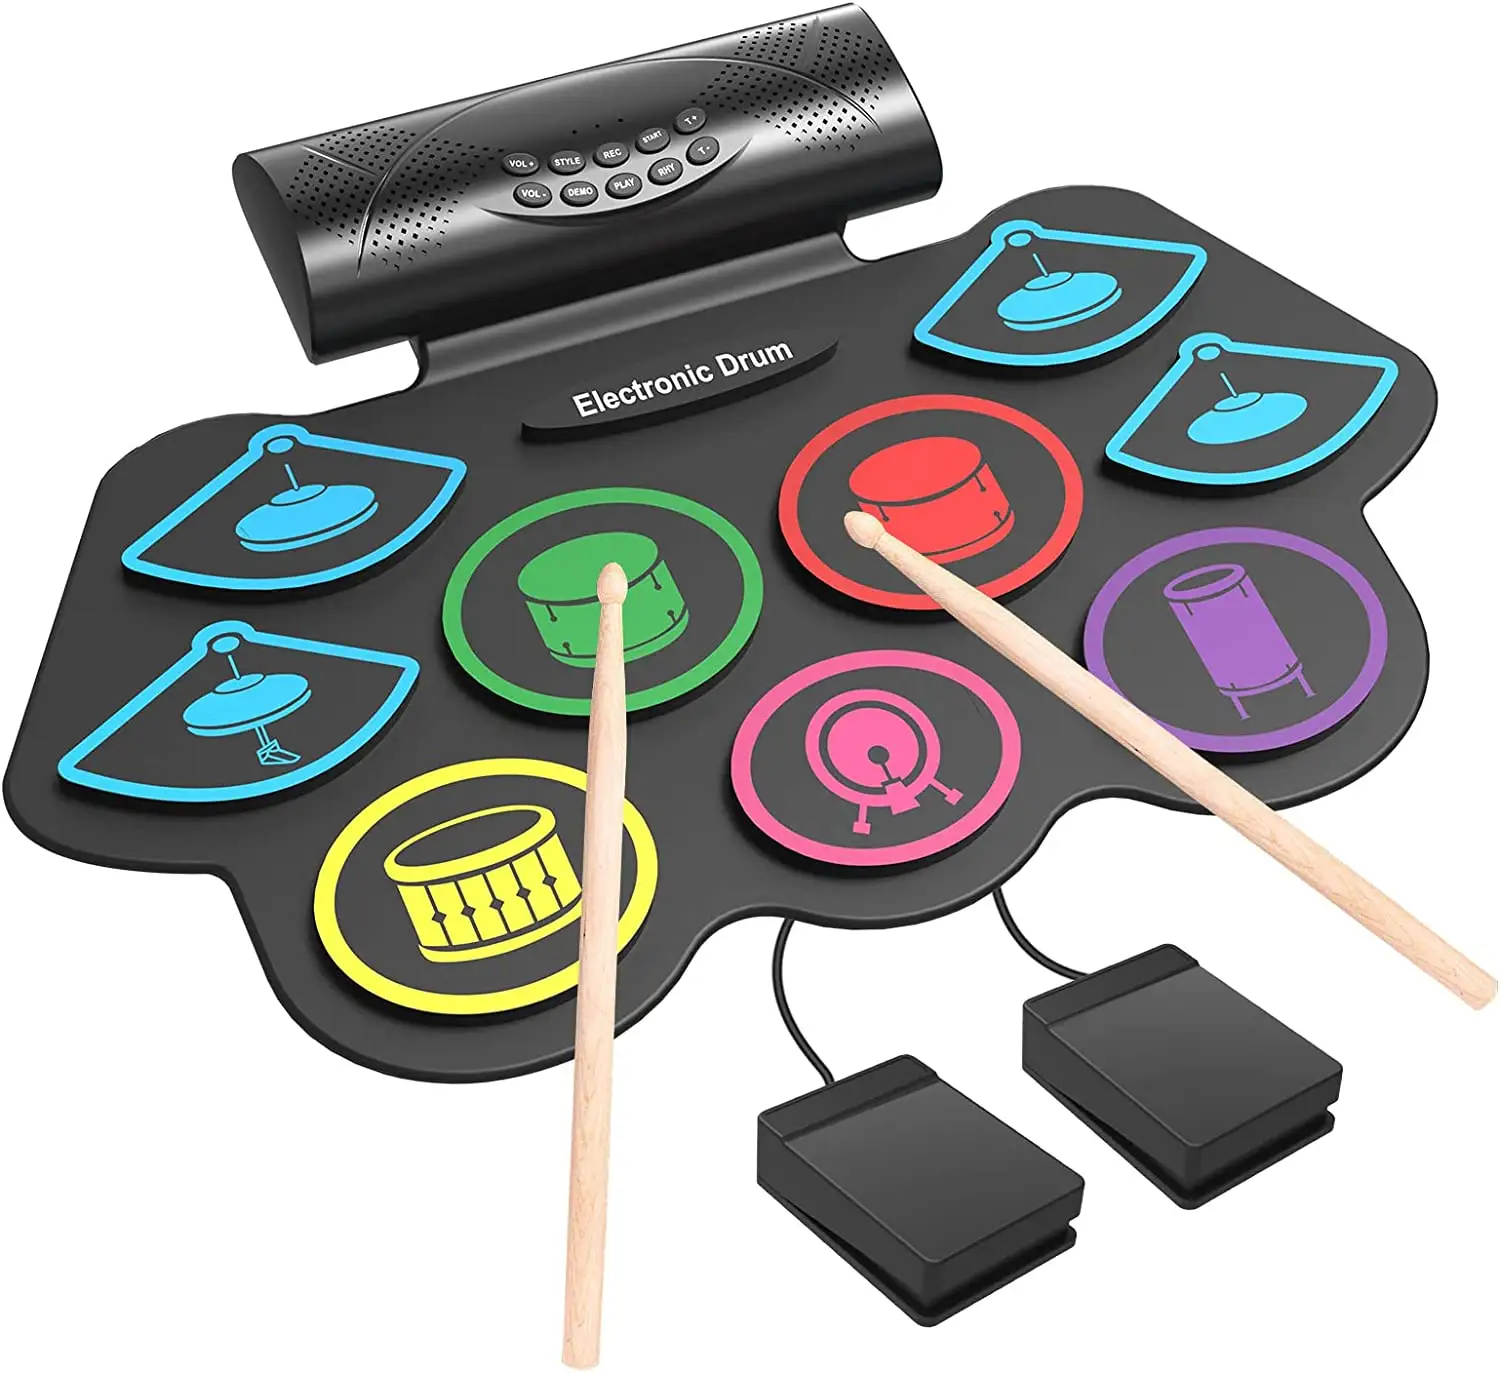 Tambor eletrônico colorido, caixa de som estéreo embutido 9 almofadas de rolo-up